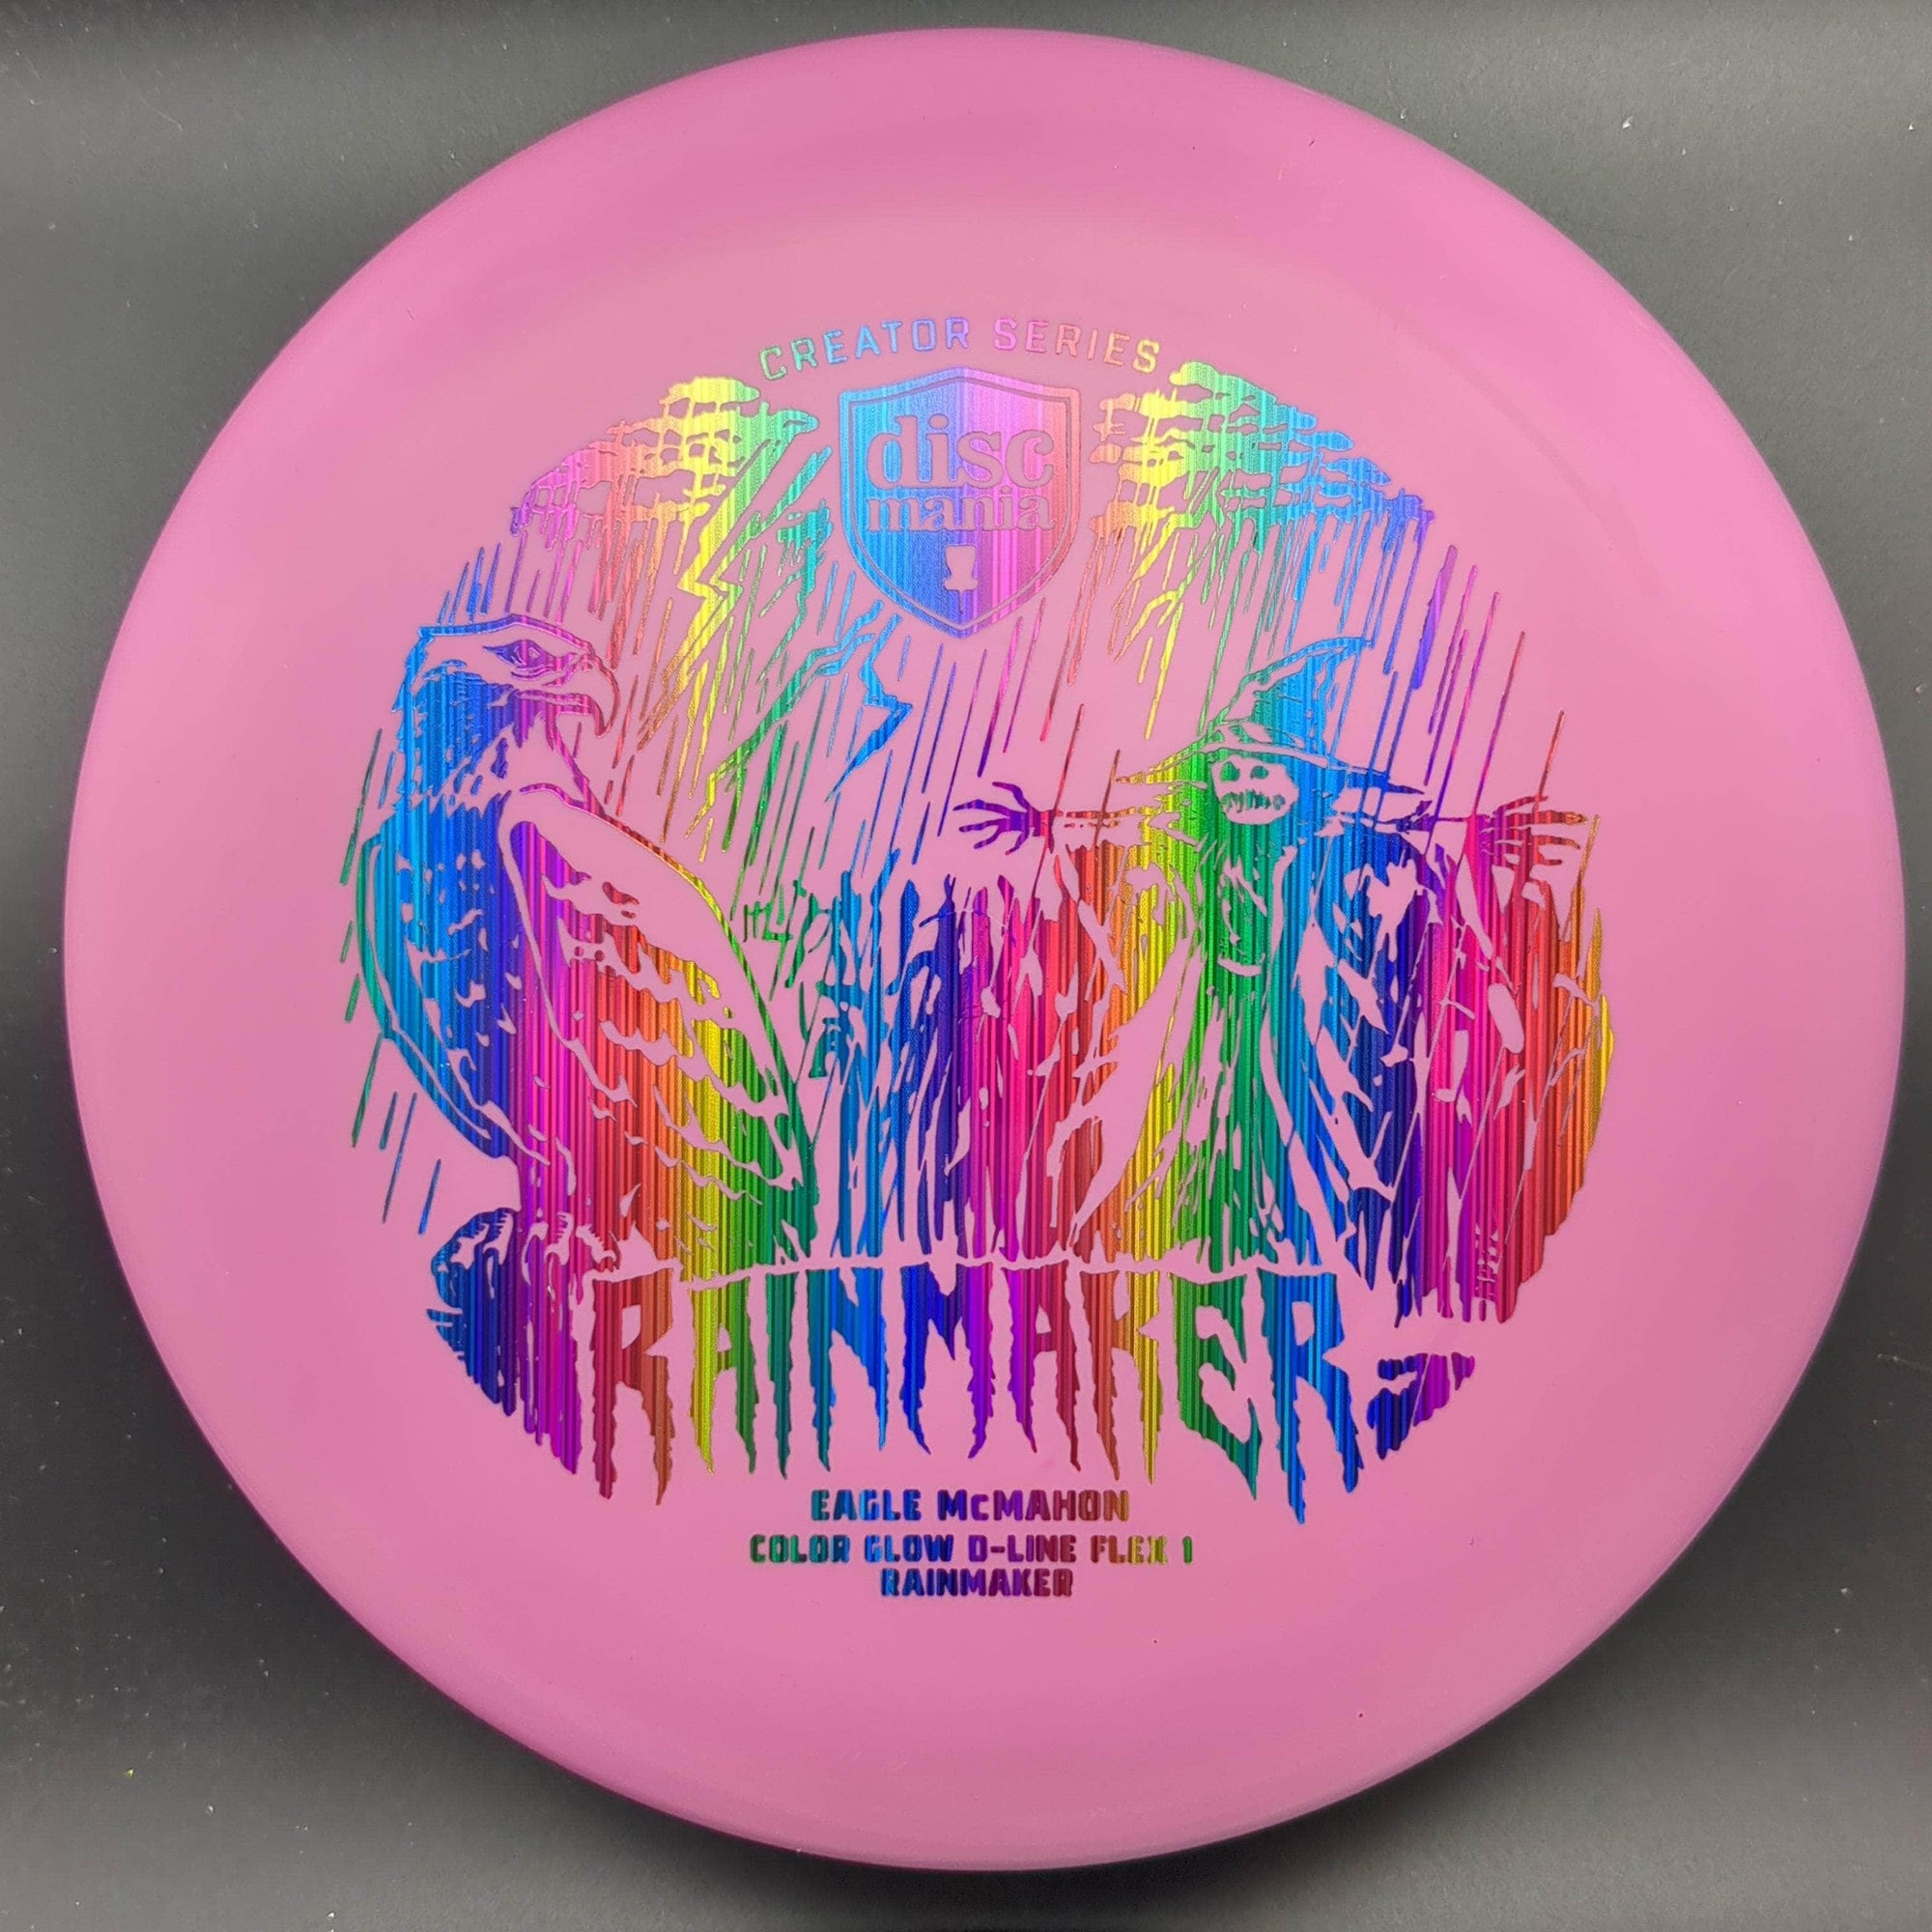 Discmania Putter Pink American Flag Stamp 176g Rainmaker, D-Line Color Glow, Halloween Edition (Flex 1)